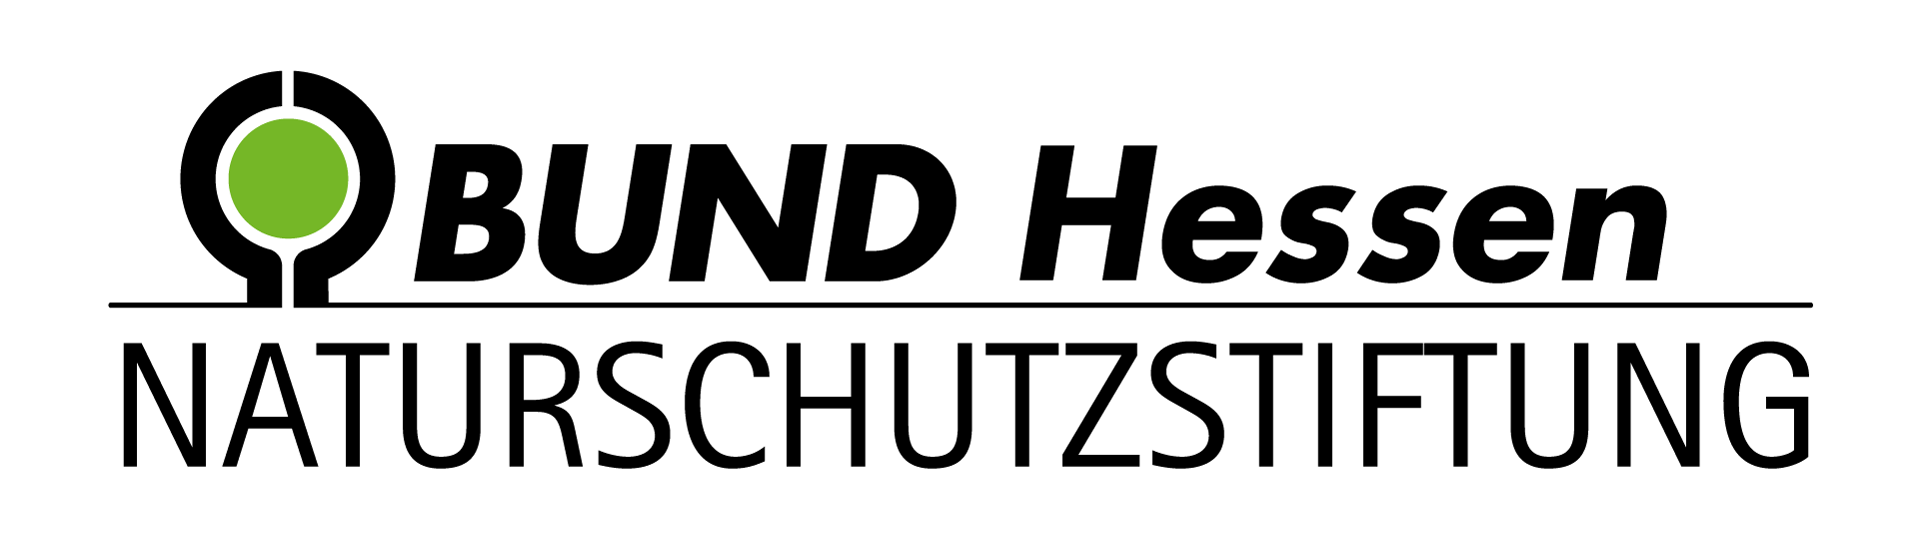 BUND Hessen Naturschutzstiftung Logo